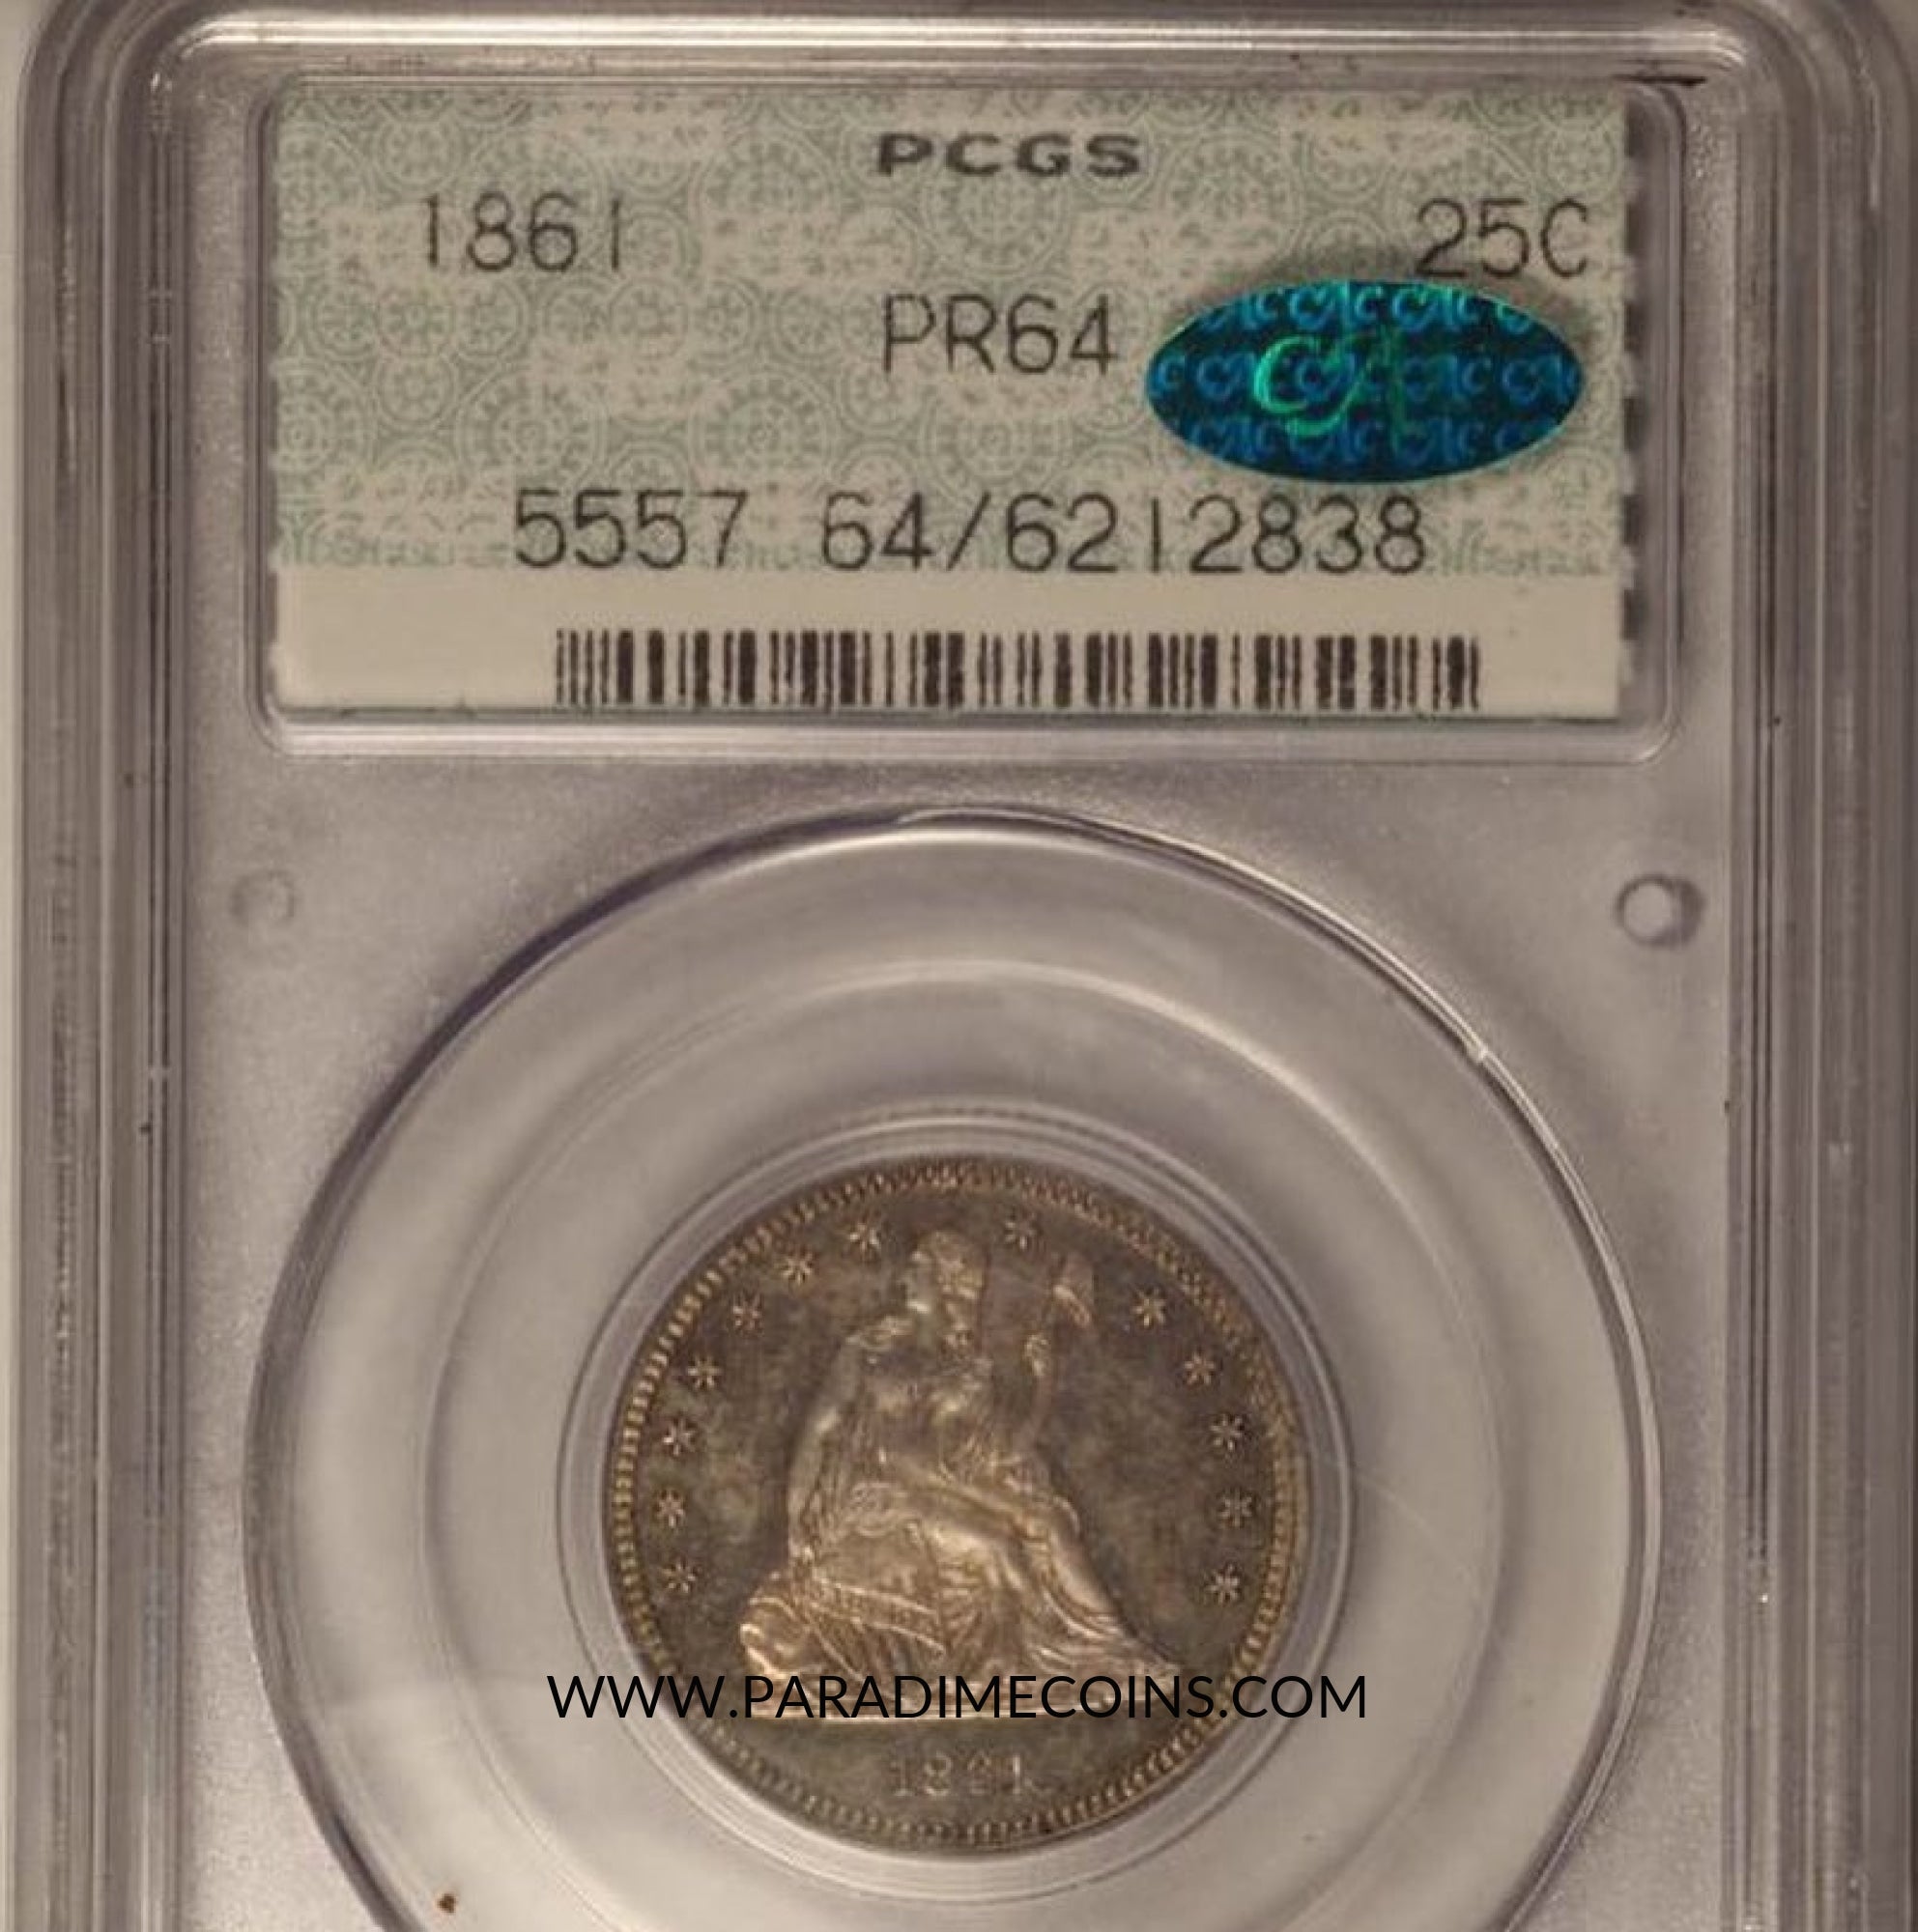 1861 25C PR64 OGH DOILY PCGS CAC - Paradime Coins US Coins For Sale